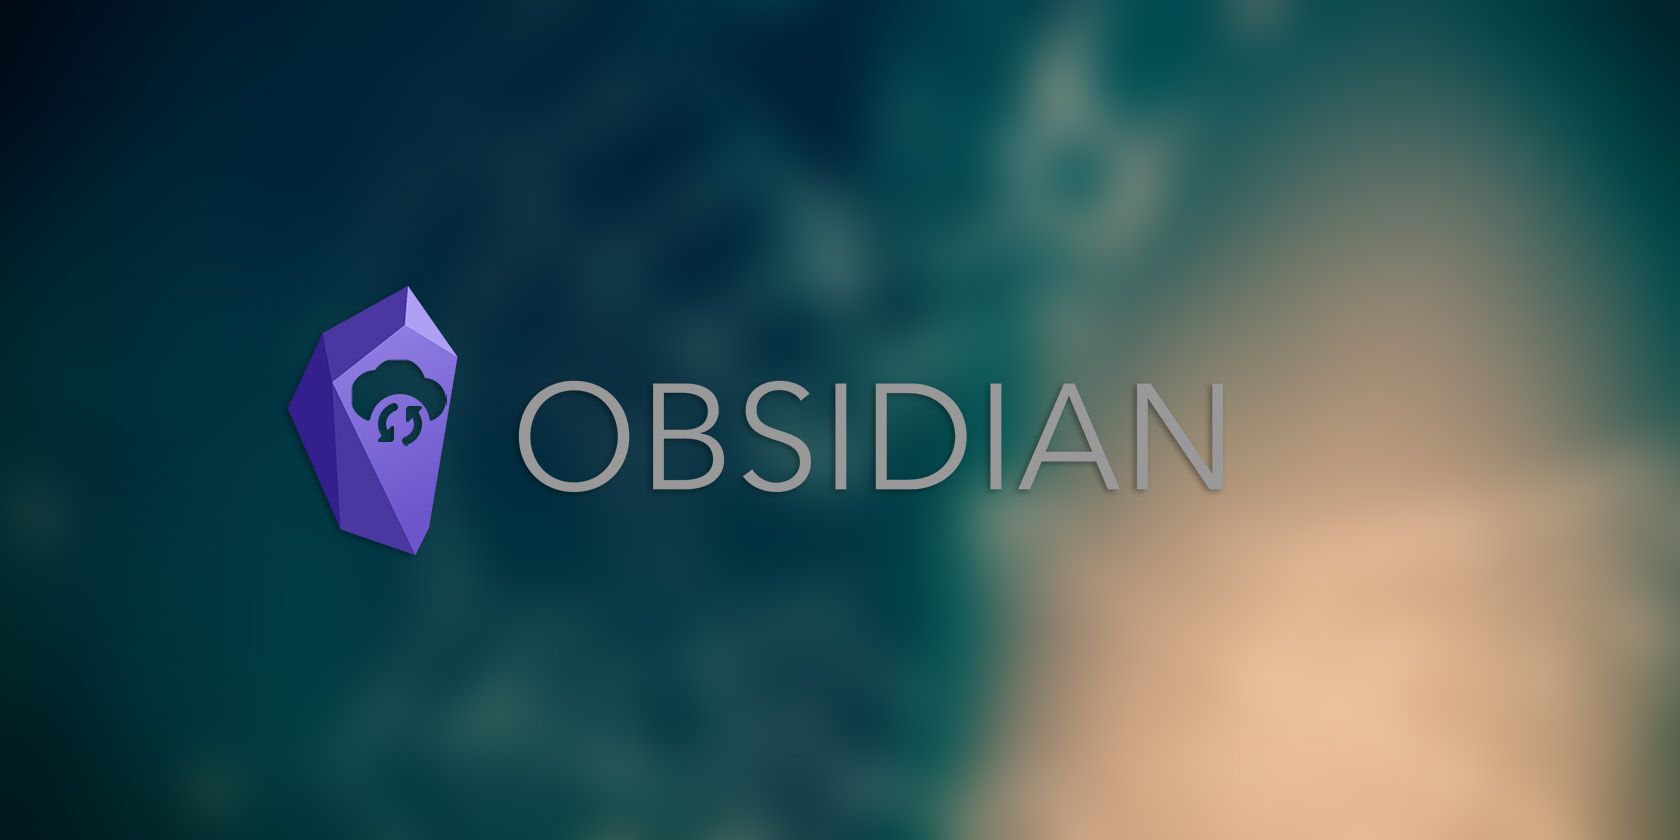 Obsidian logo with a cloud sync icon